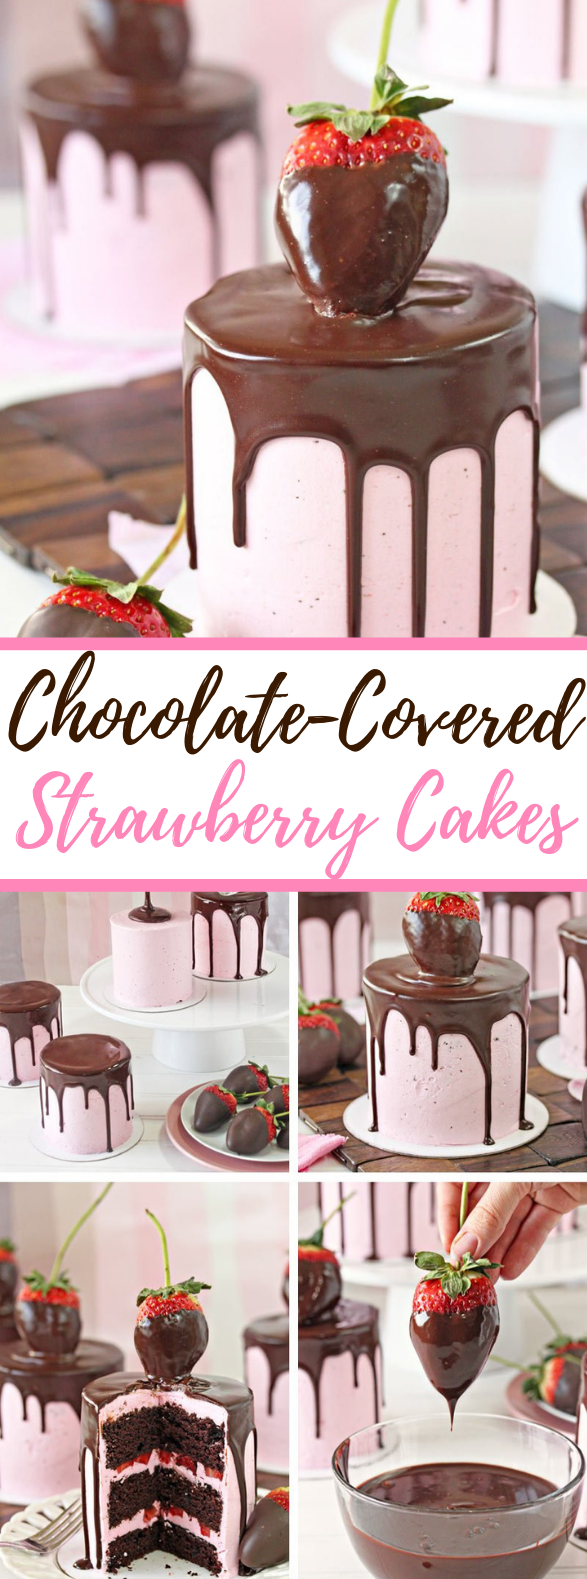 CHOCOLATE-COVERED STRAWBERRY CAKES #dessert #chocolatecake